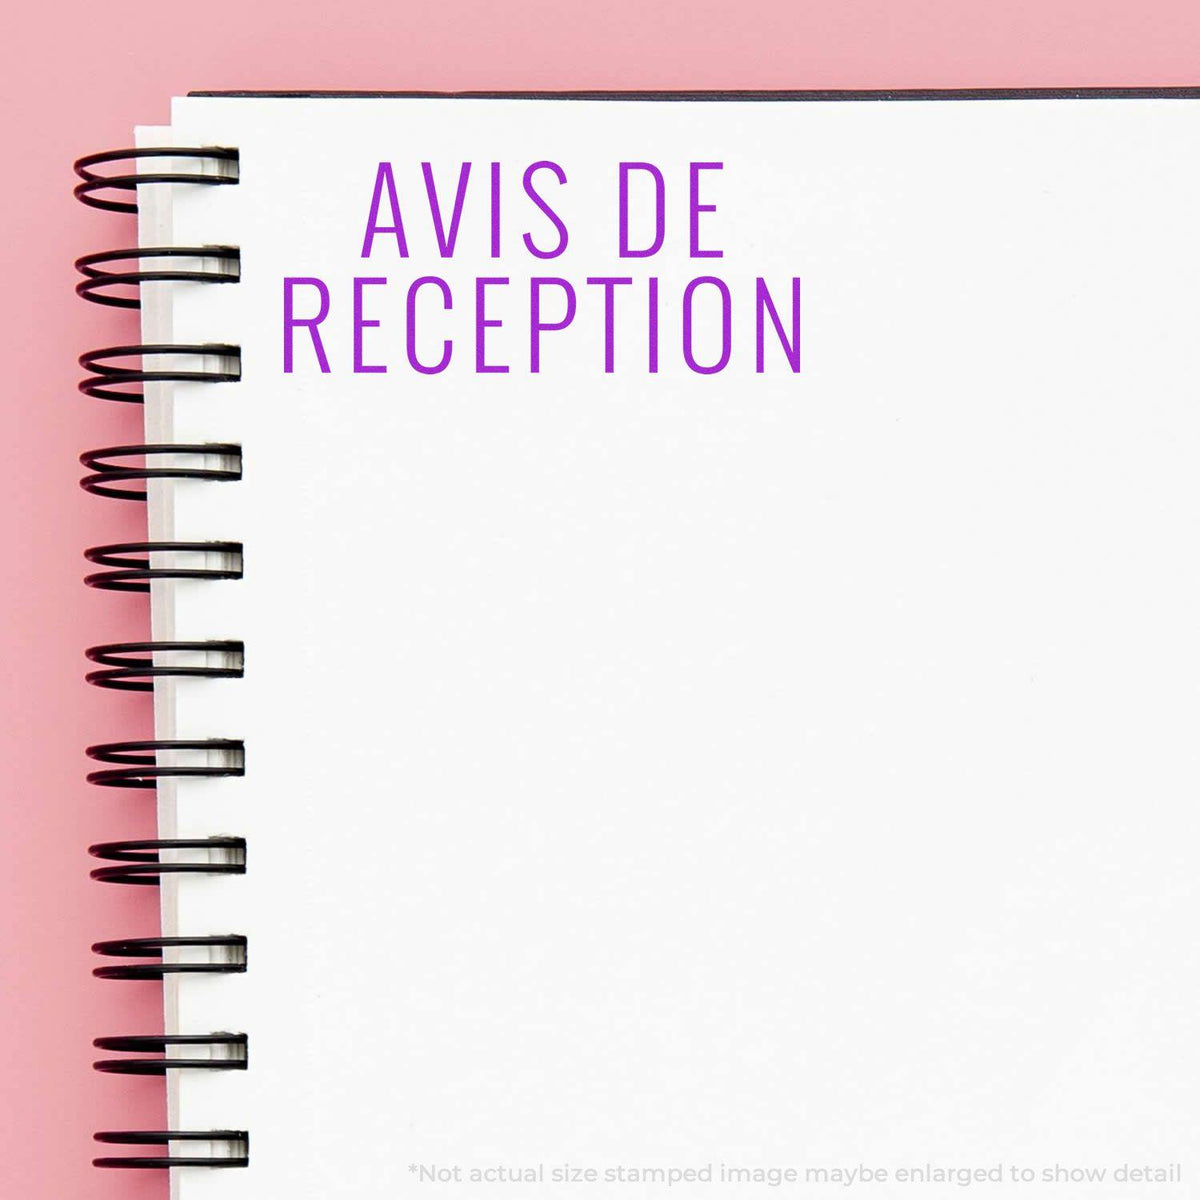 In Use Avis De Receiption Rubber Stamp Image